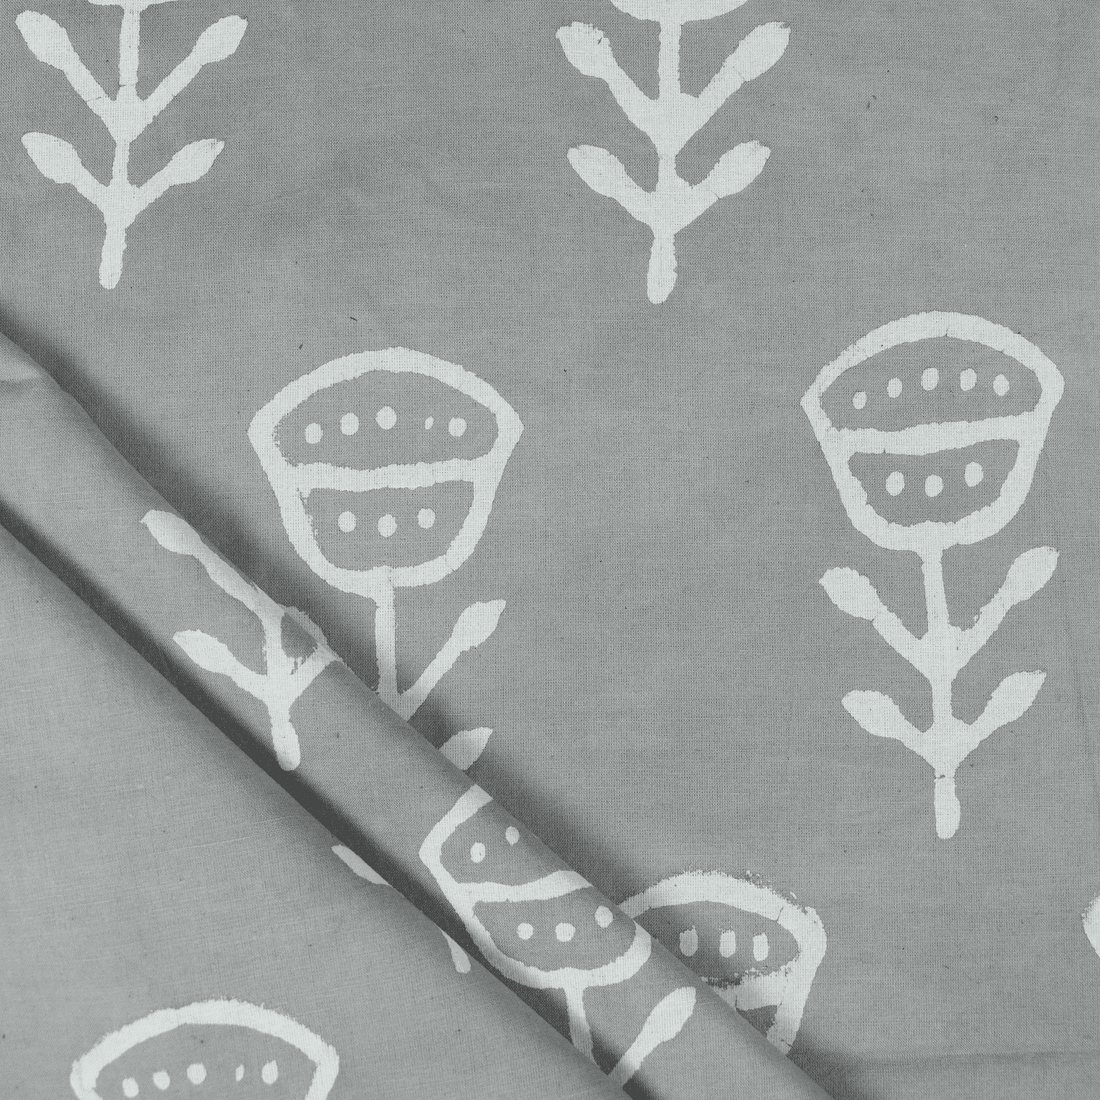 Handmade Floral Print Silk Cotton Fabric